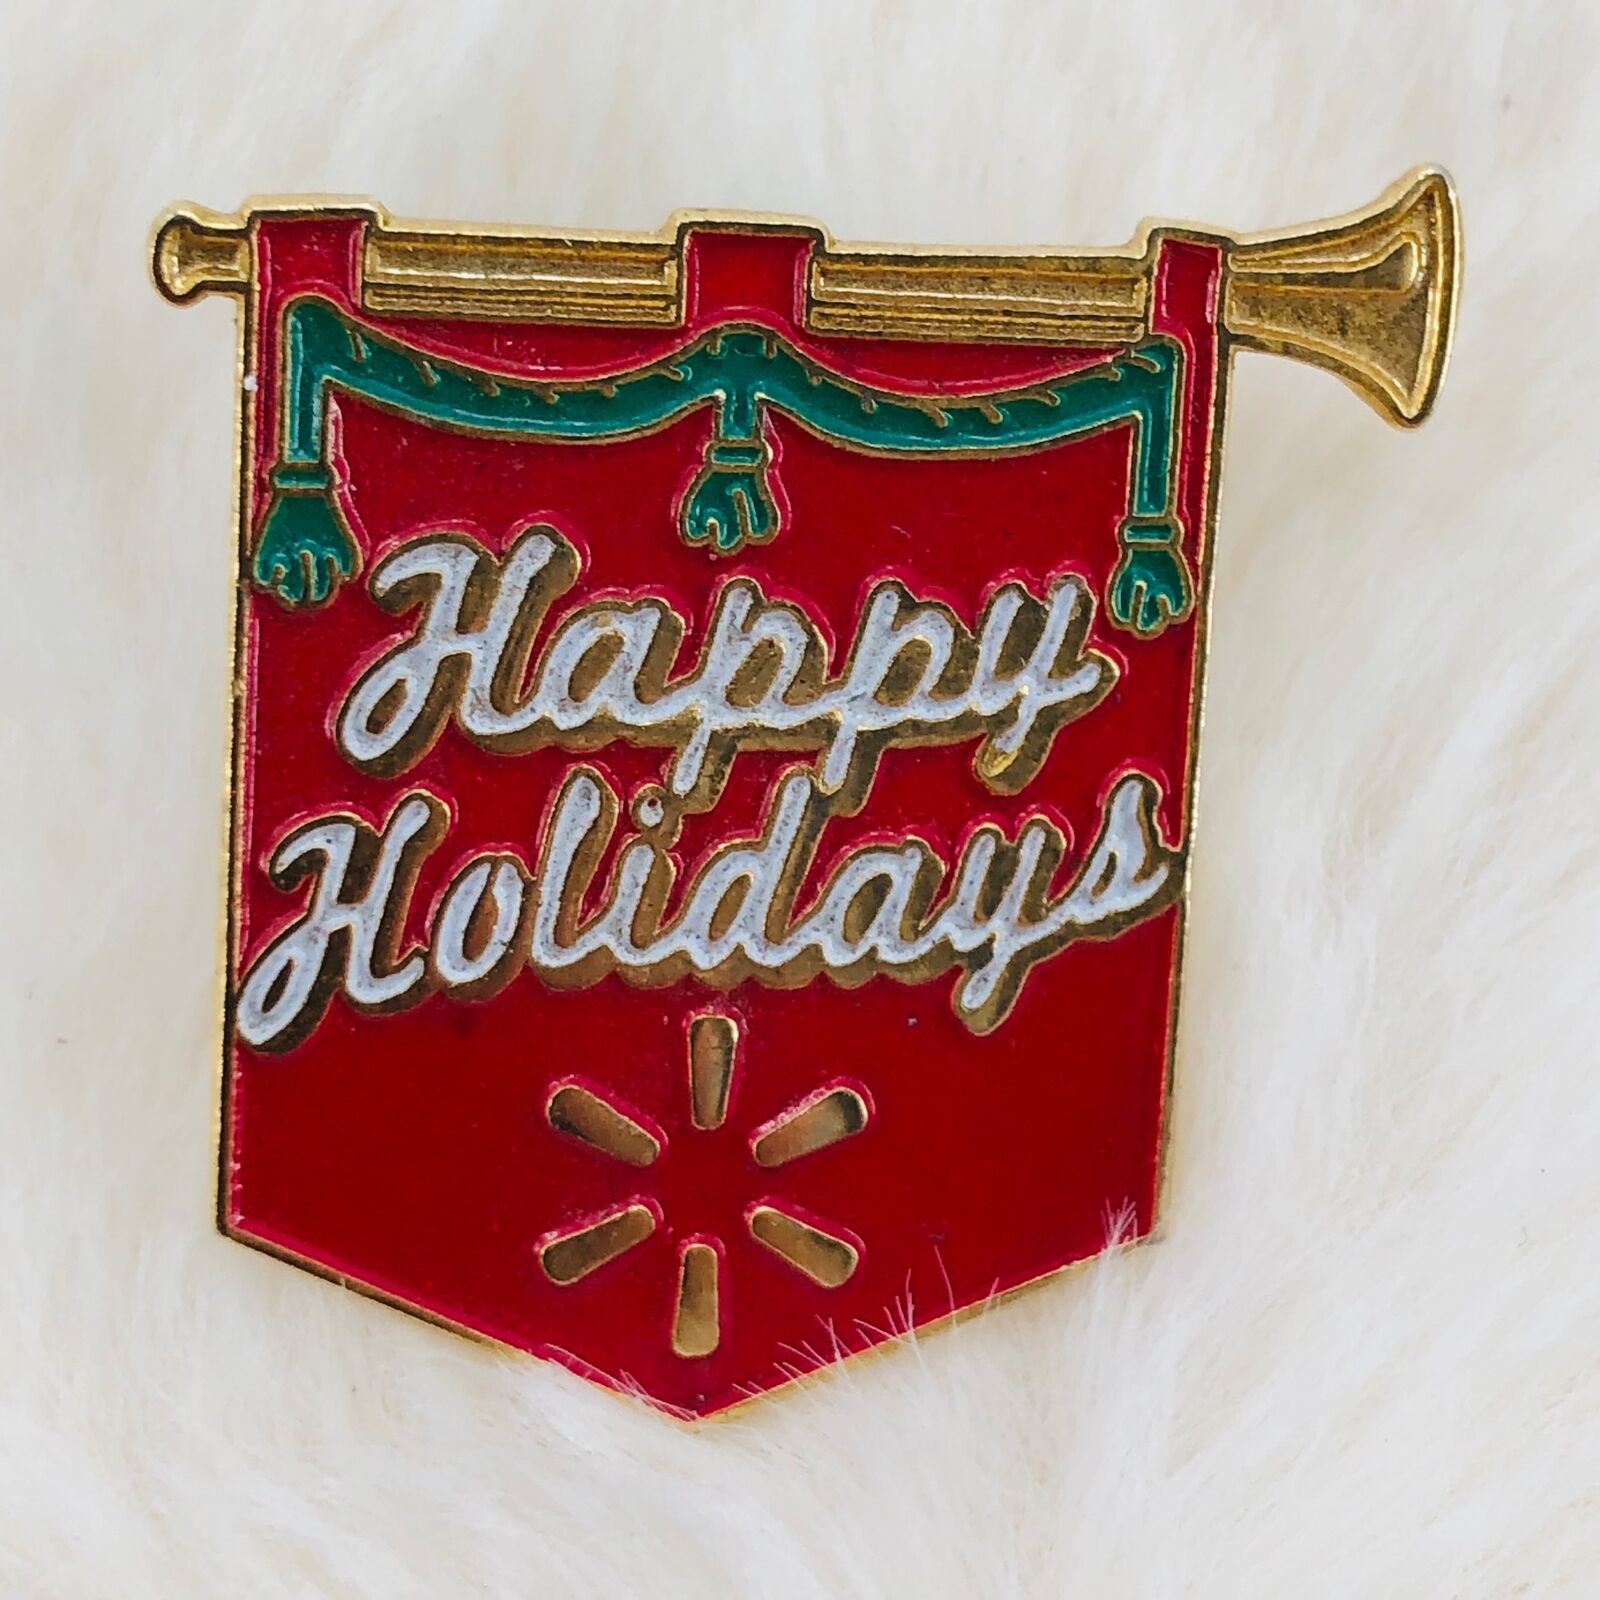 2009 Walmart Employee Happy Holidays Christmas Lapel Pin by Hogeye